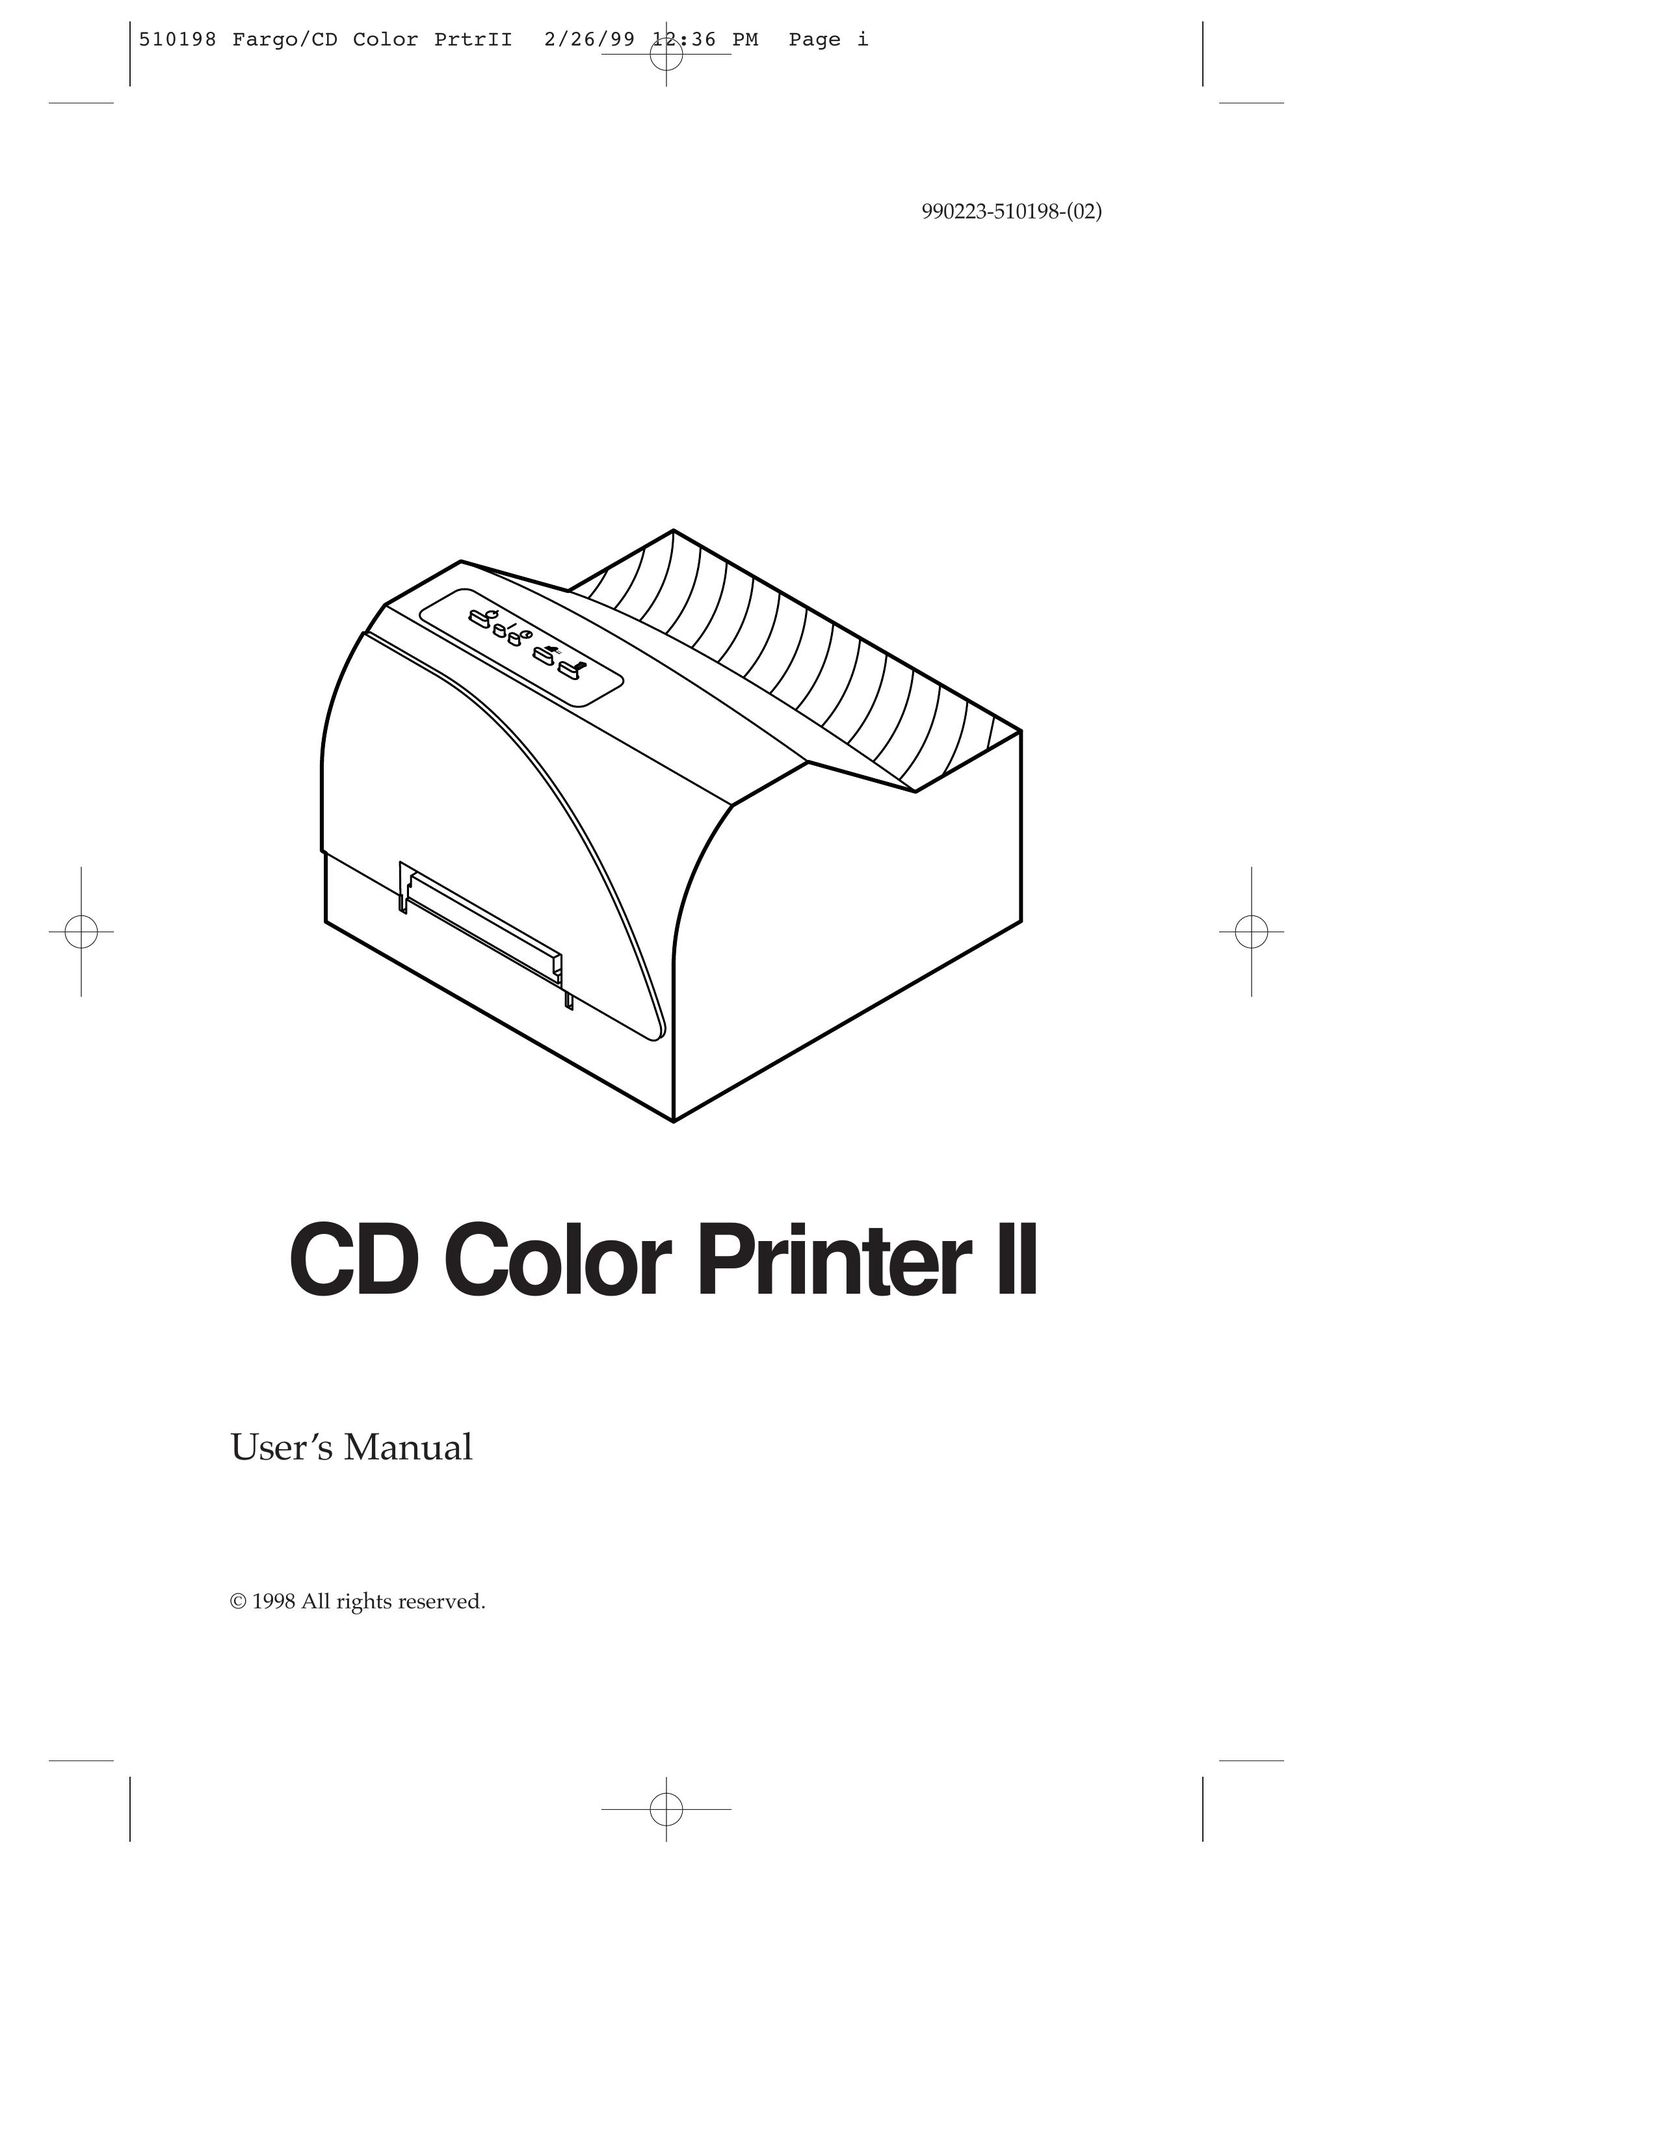 Primera Technology CD Color Printer II Printer User Manual